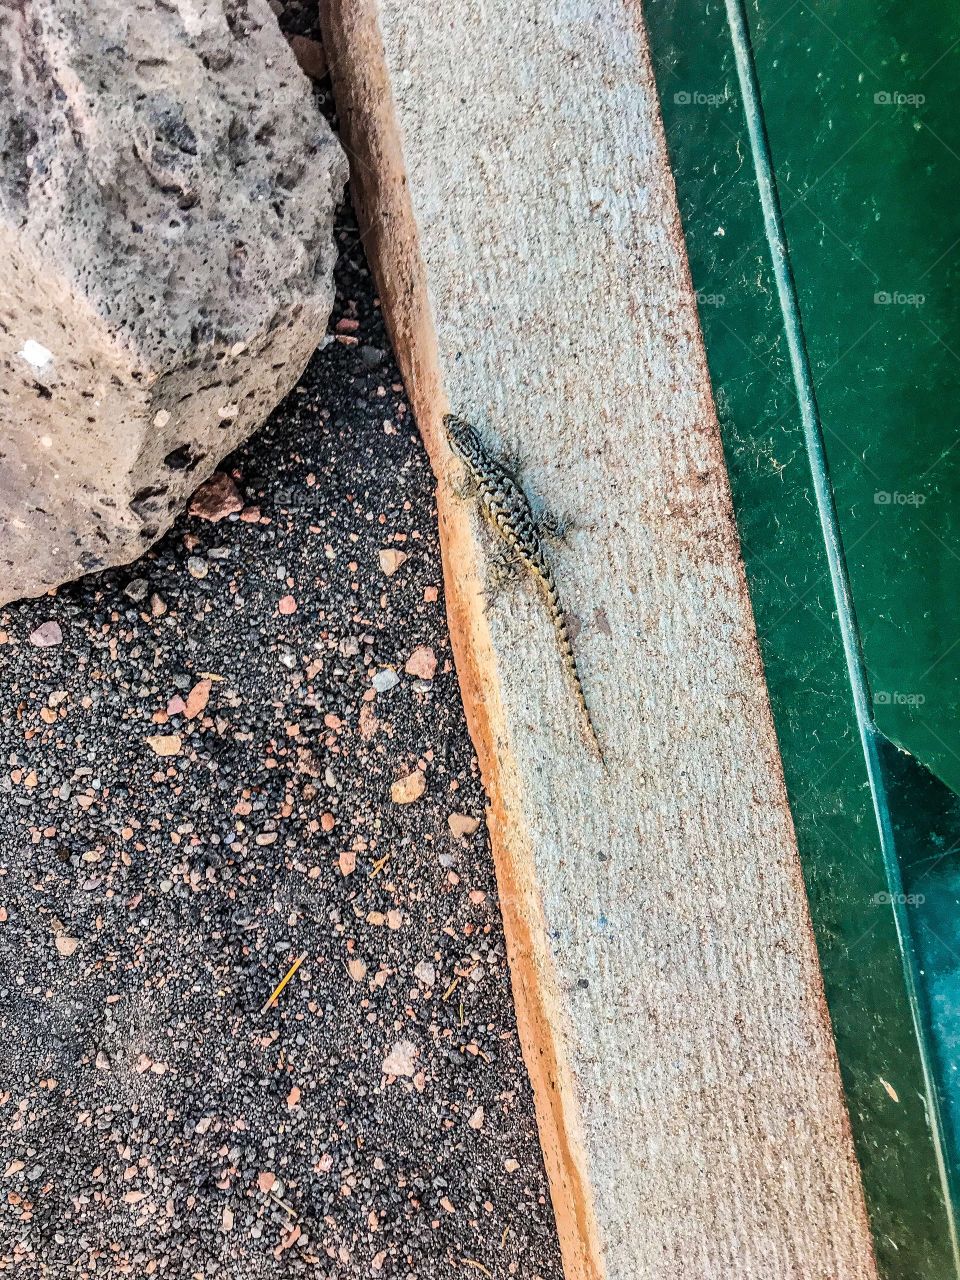 Black and Tan striped lizard on sidewalk in Arizona 